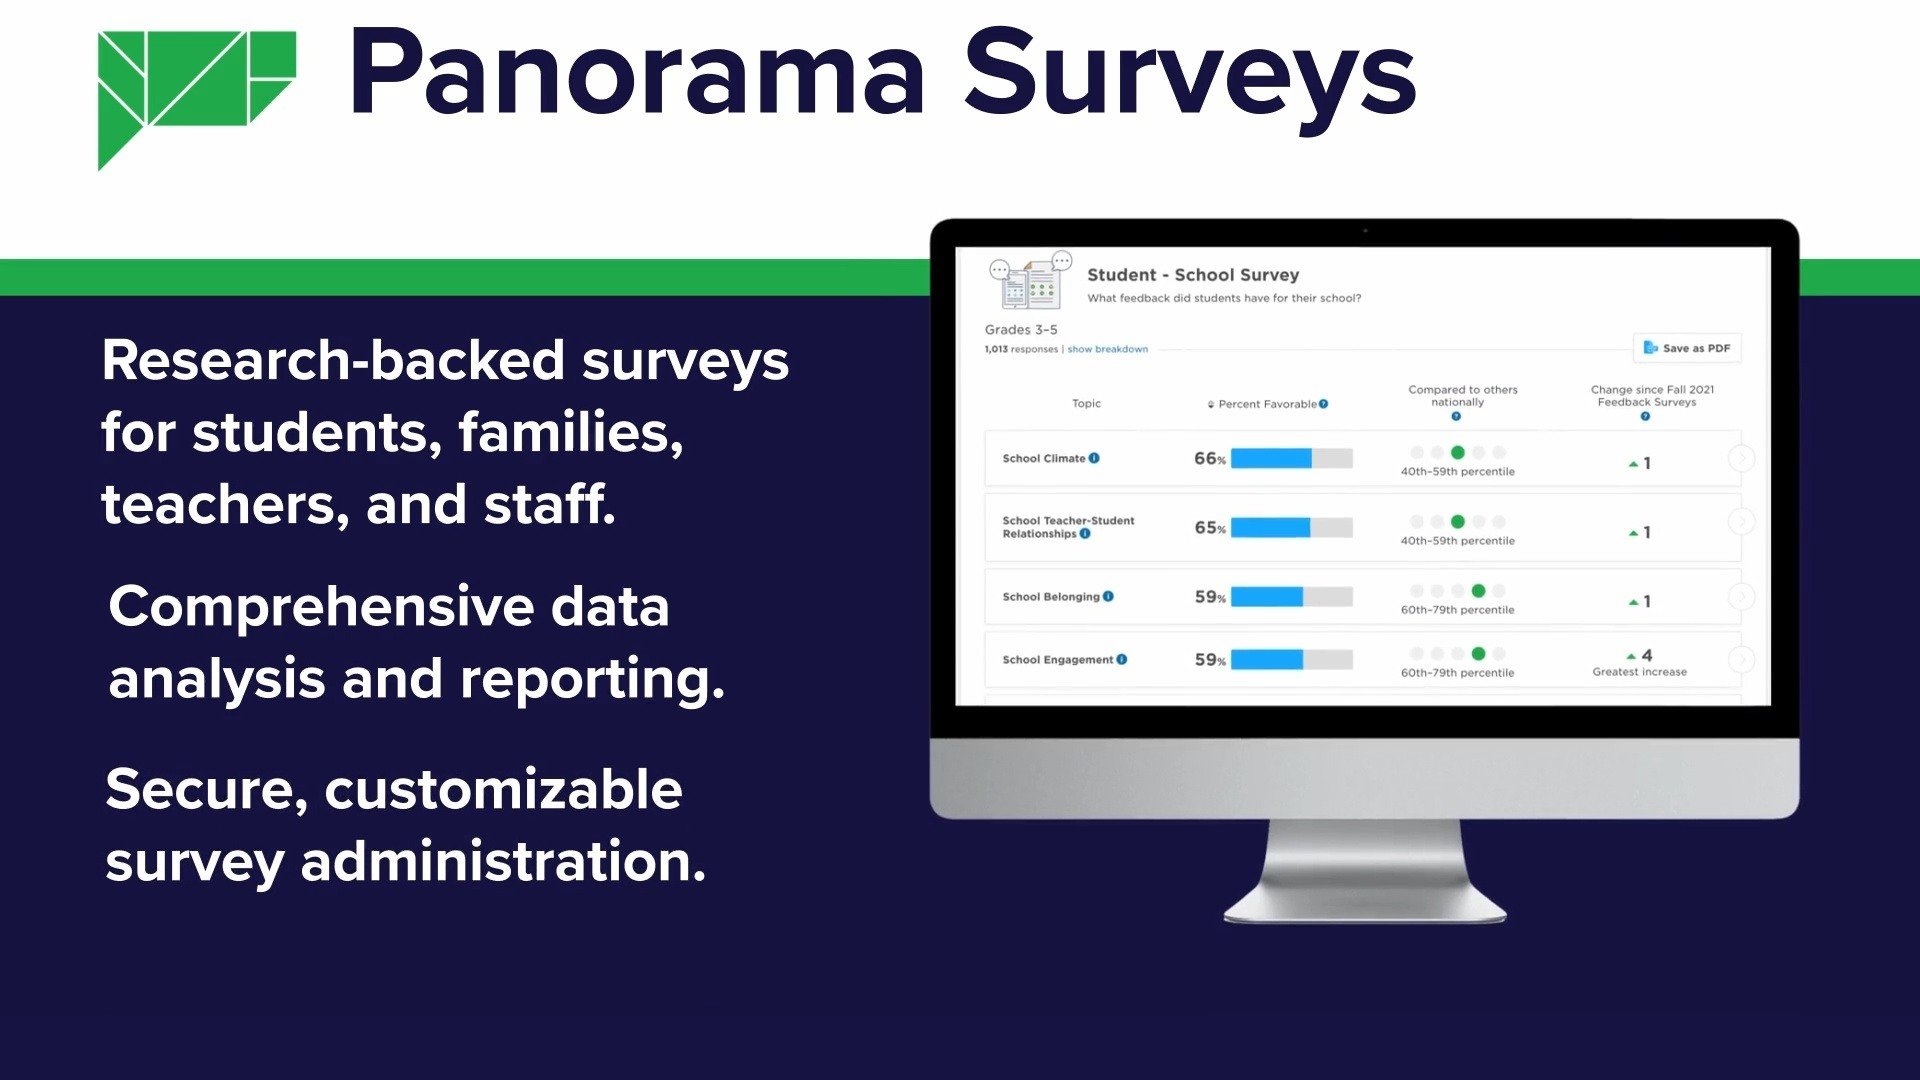 Introduction to Panorama Surveys